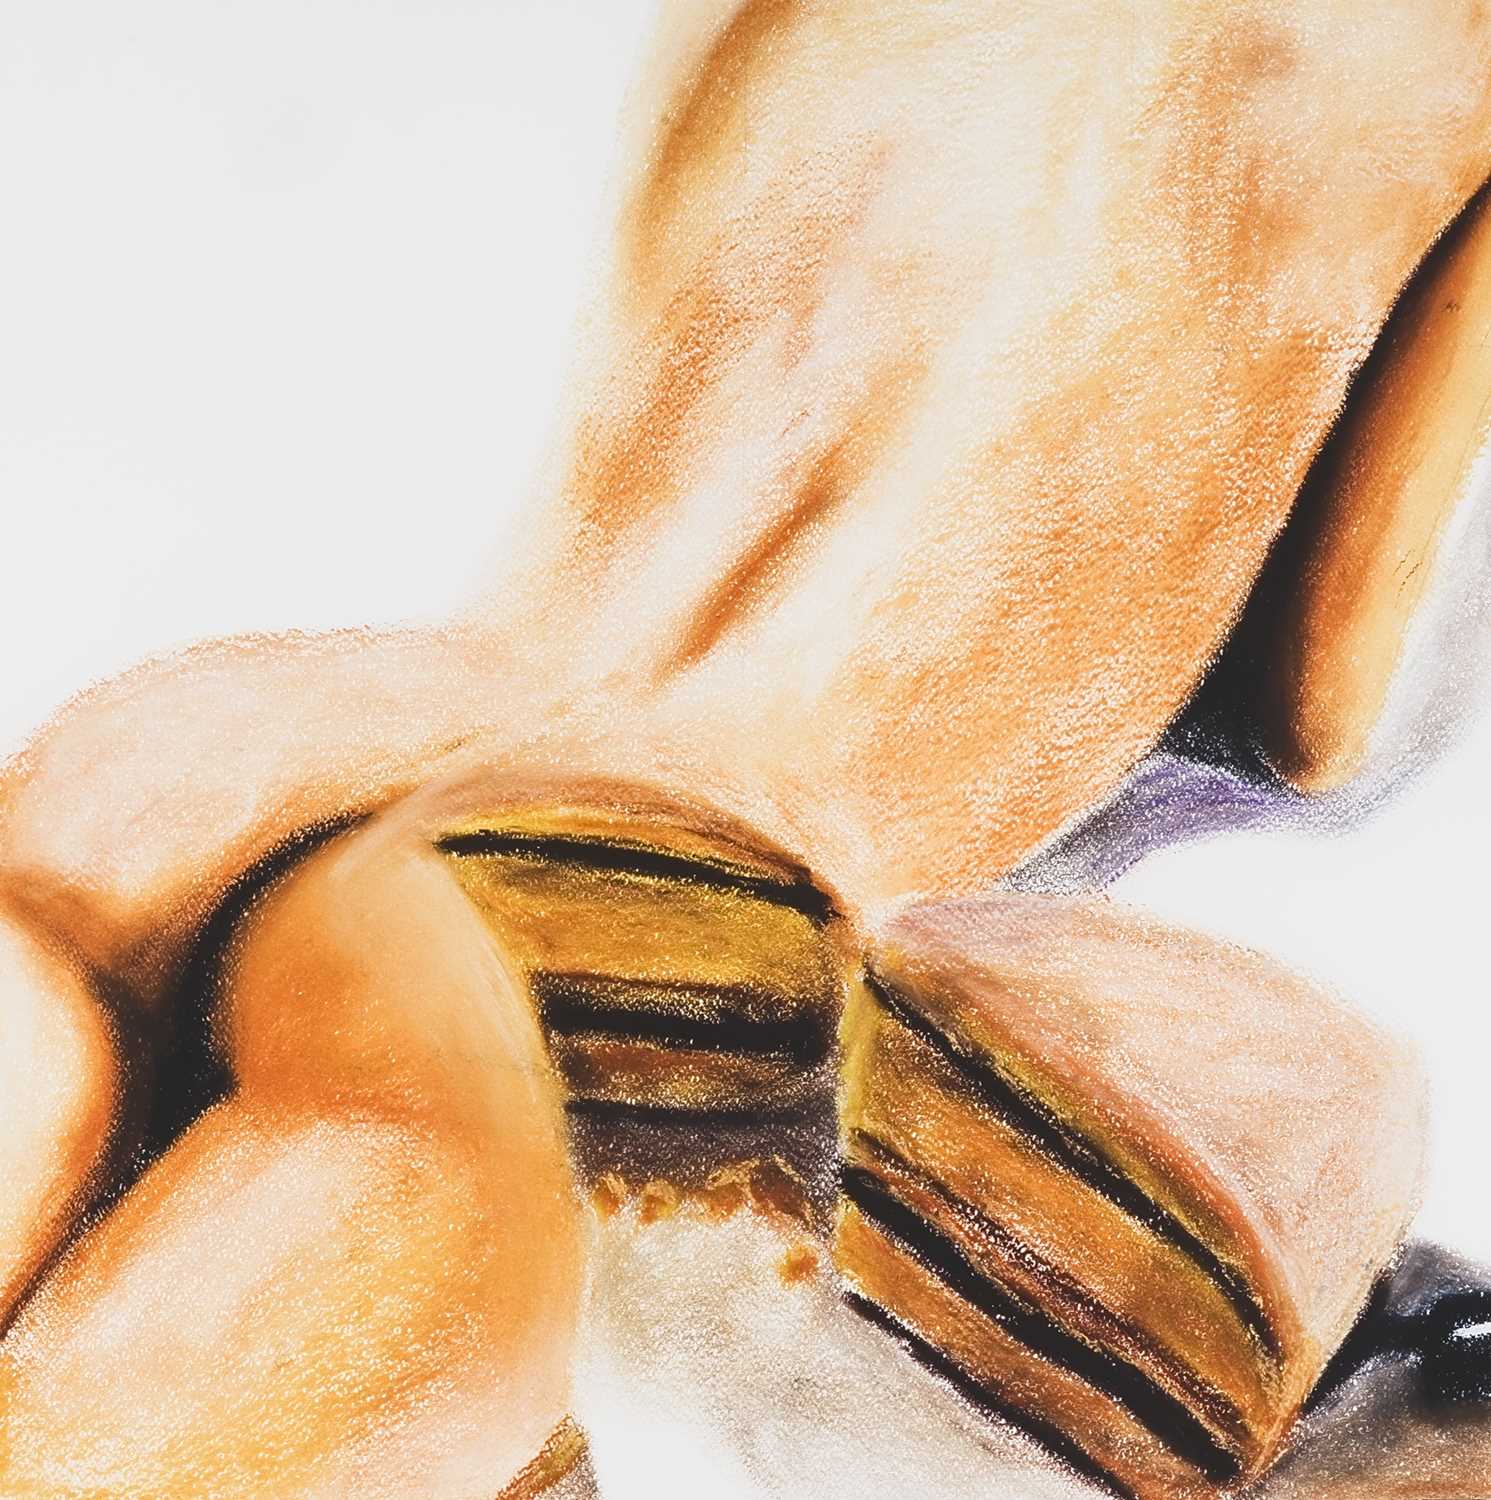 Lot 35 - Gina Beavers (American 1974-), 'Cake', 2015